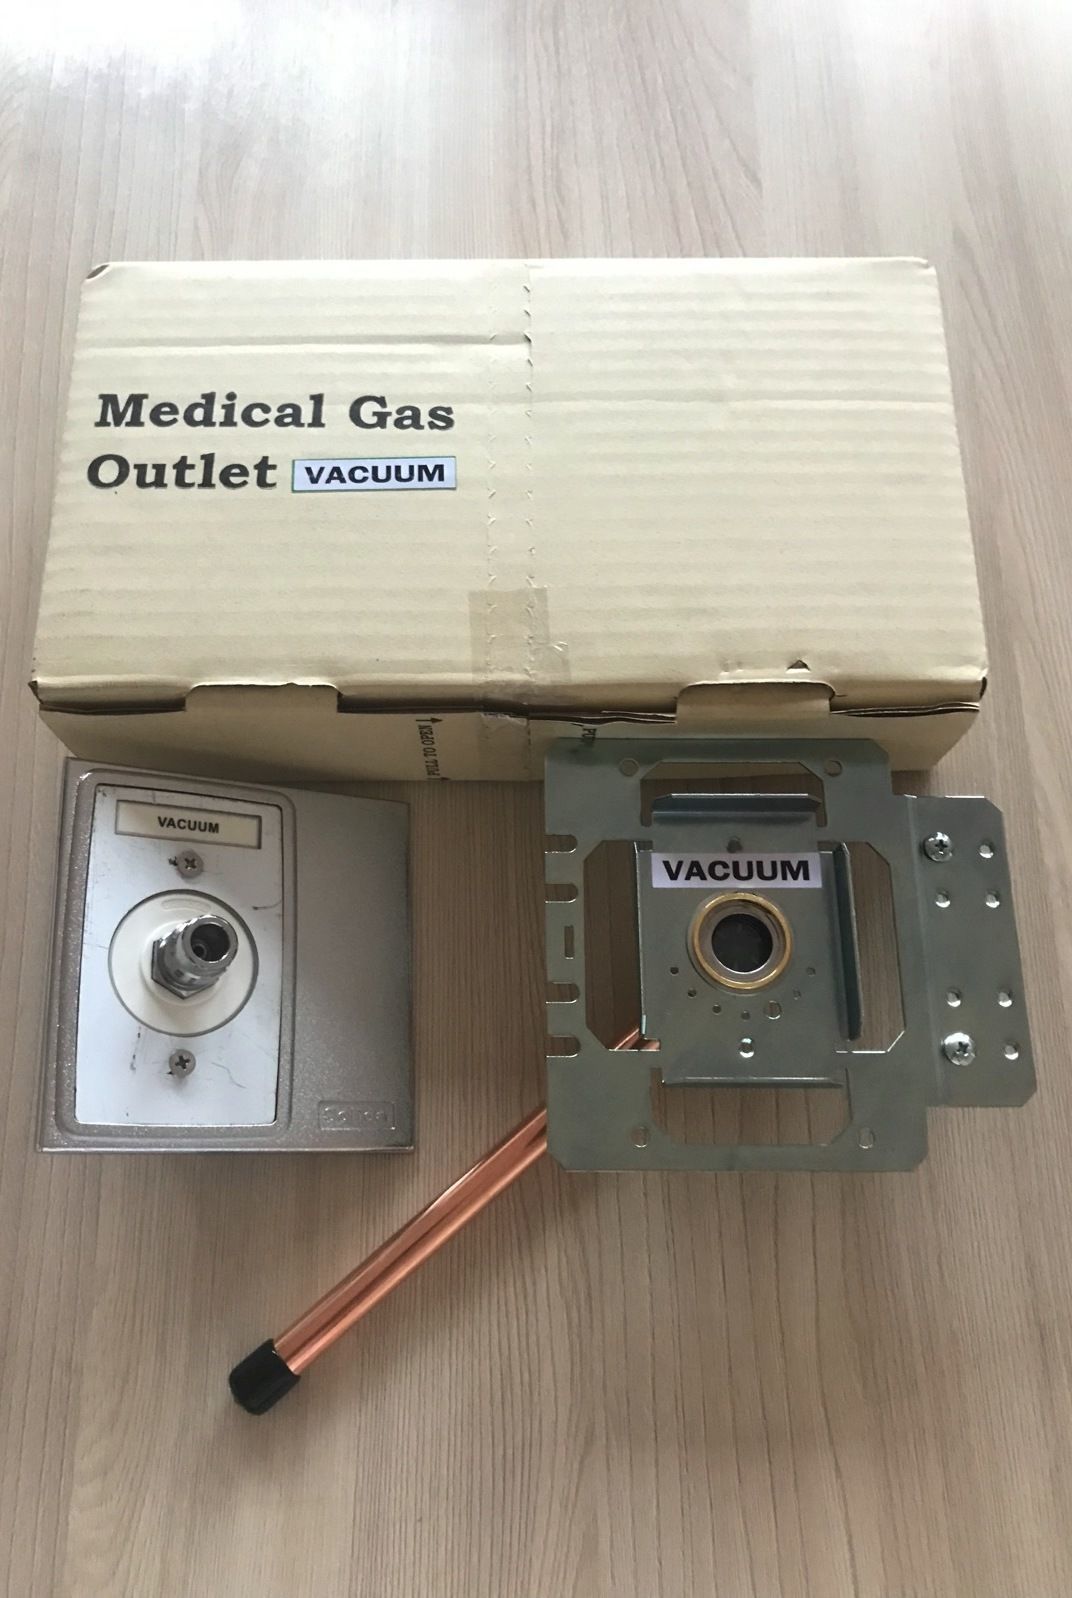 Vacuum Gas Outlet Diss Connector_ชุดแป้นจ่ายสุญญากาศทางการแพทย์แบบข้อต่อเกลียวหมุน Diss สำหรับติดเพดานห้องผ่าตัดหรือติดผนังรถพยาบาล